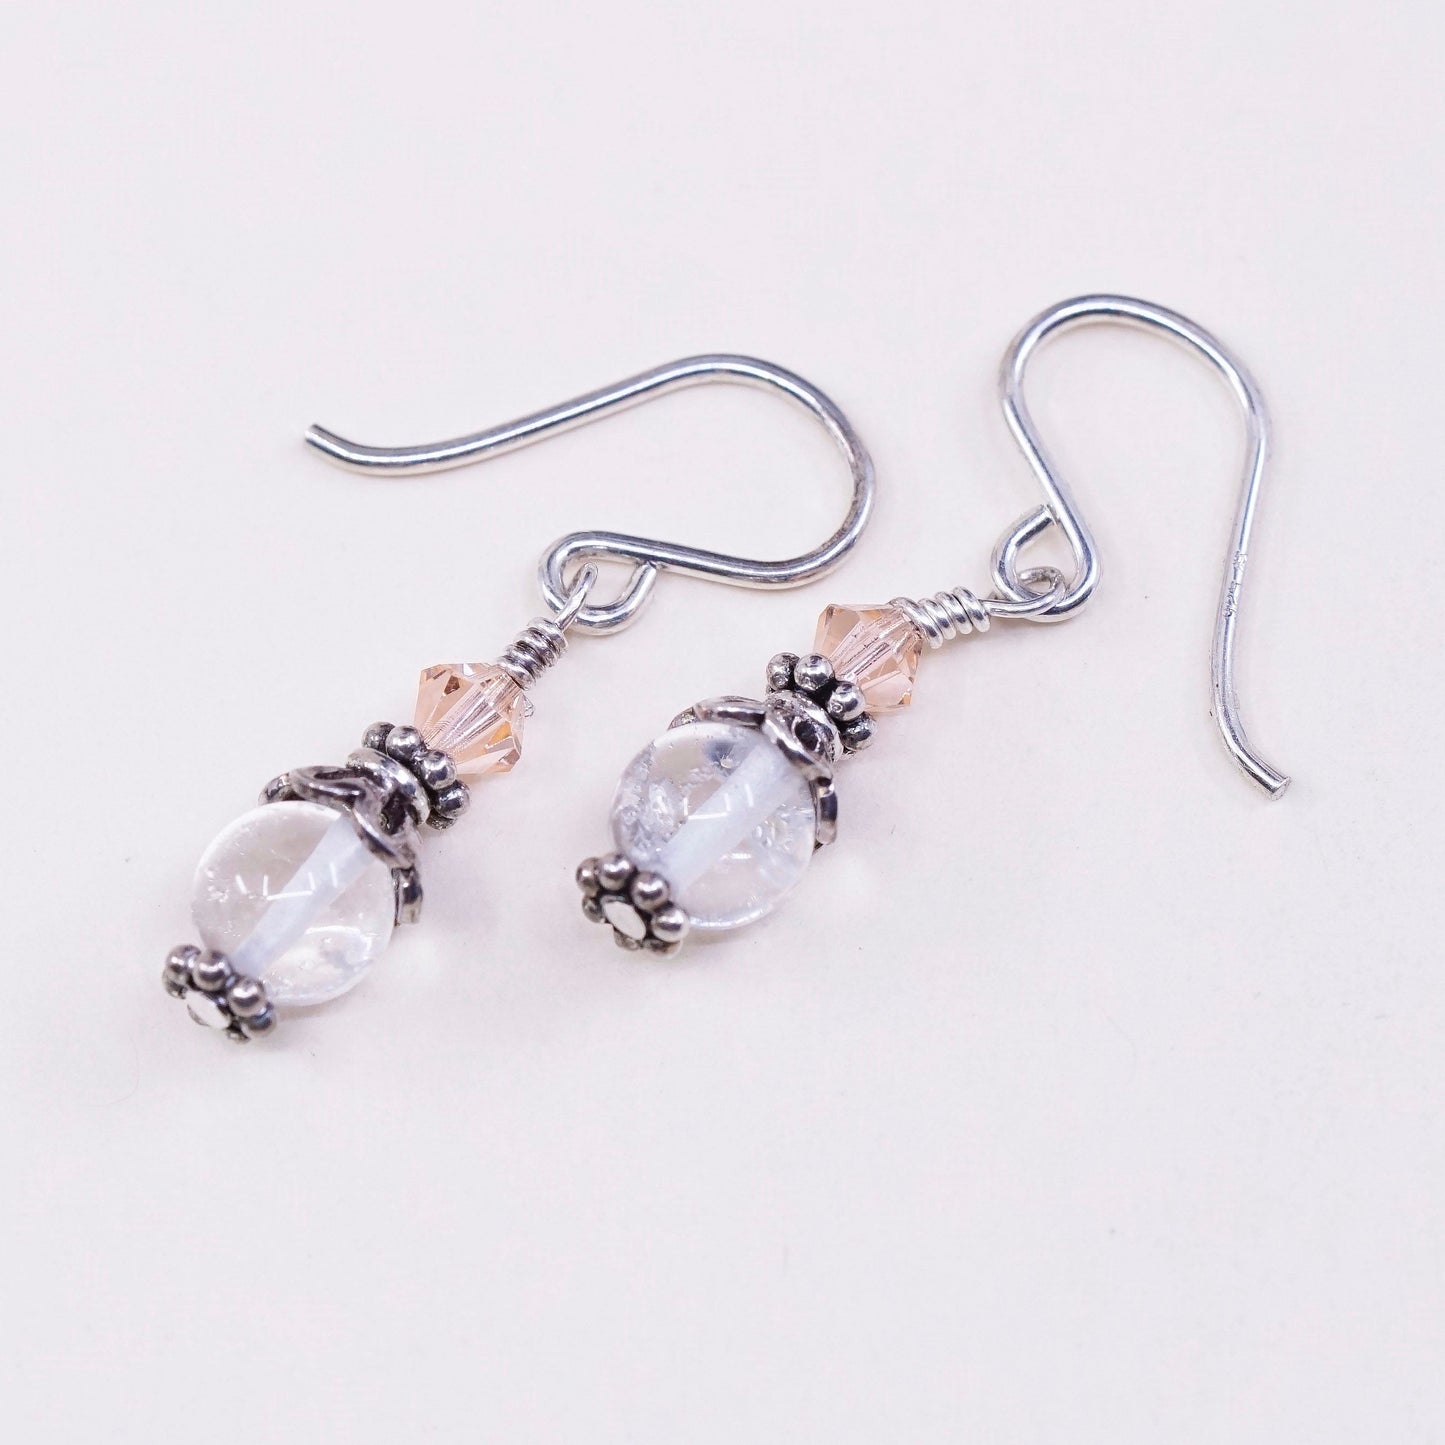 Vintage Sterling silver handmade earrings, 925 hooks with crystal drops